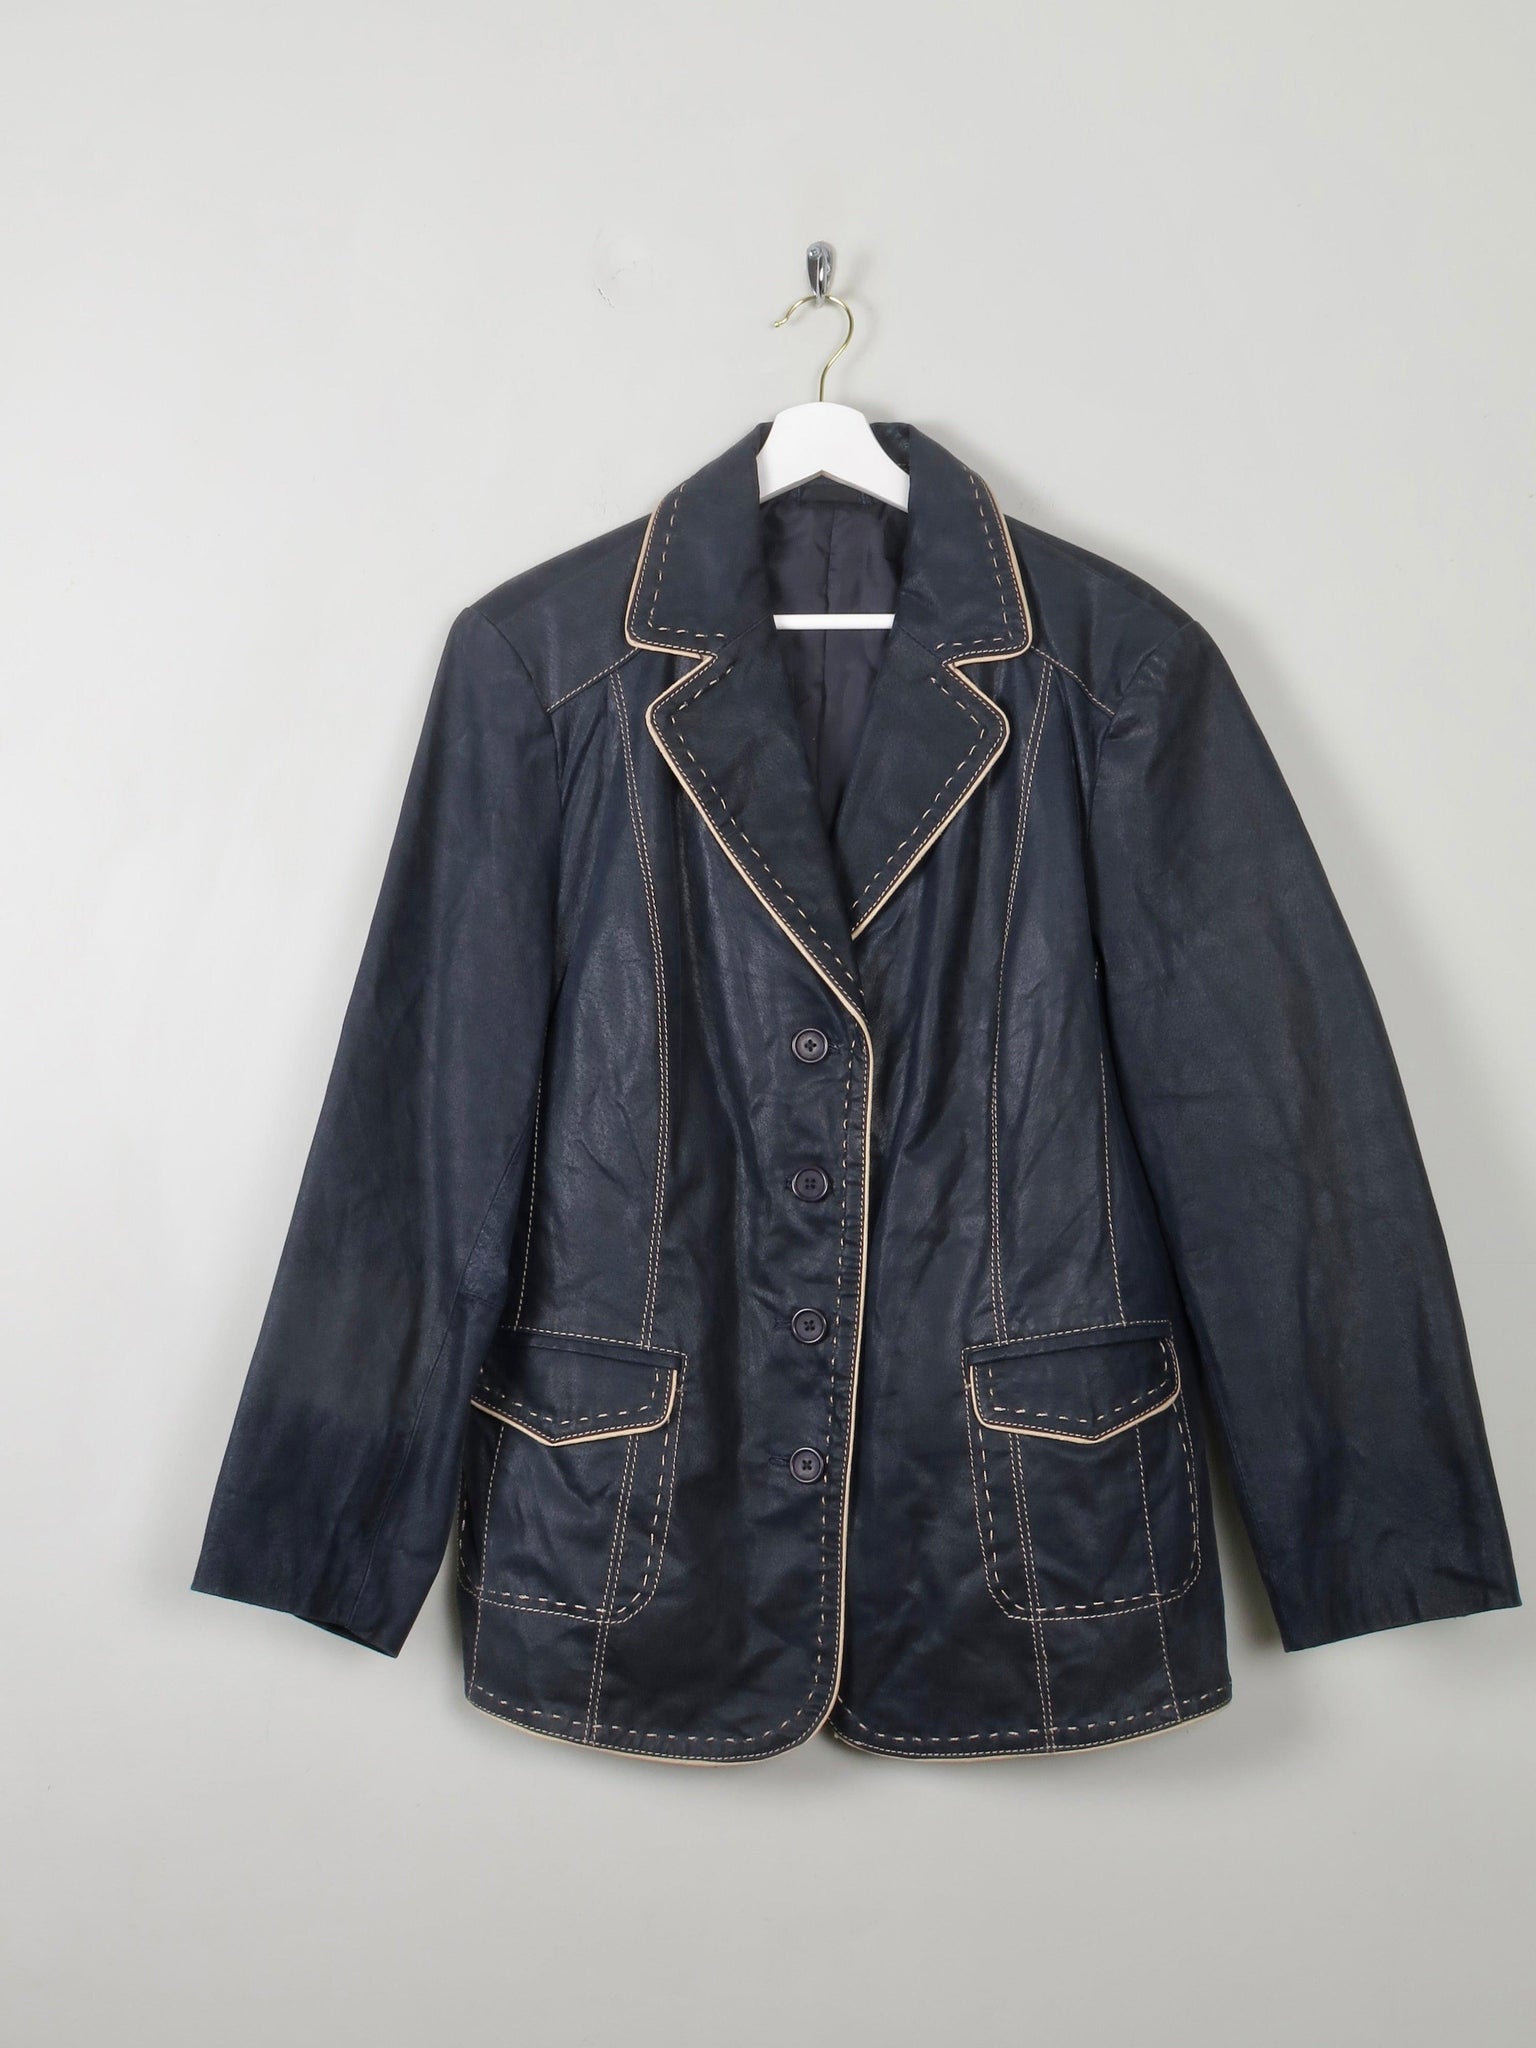 Women's Vintage Navy Leather Jacket L/XL - The Harlequin